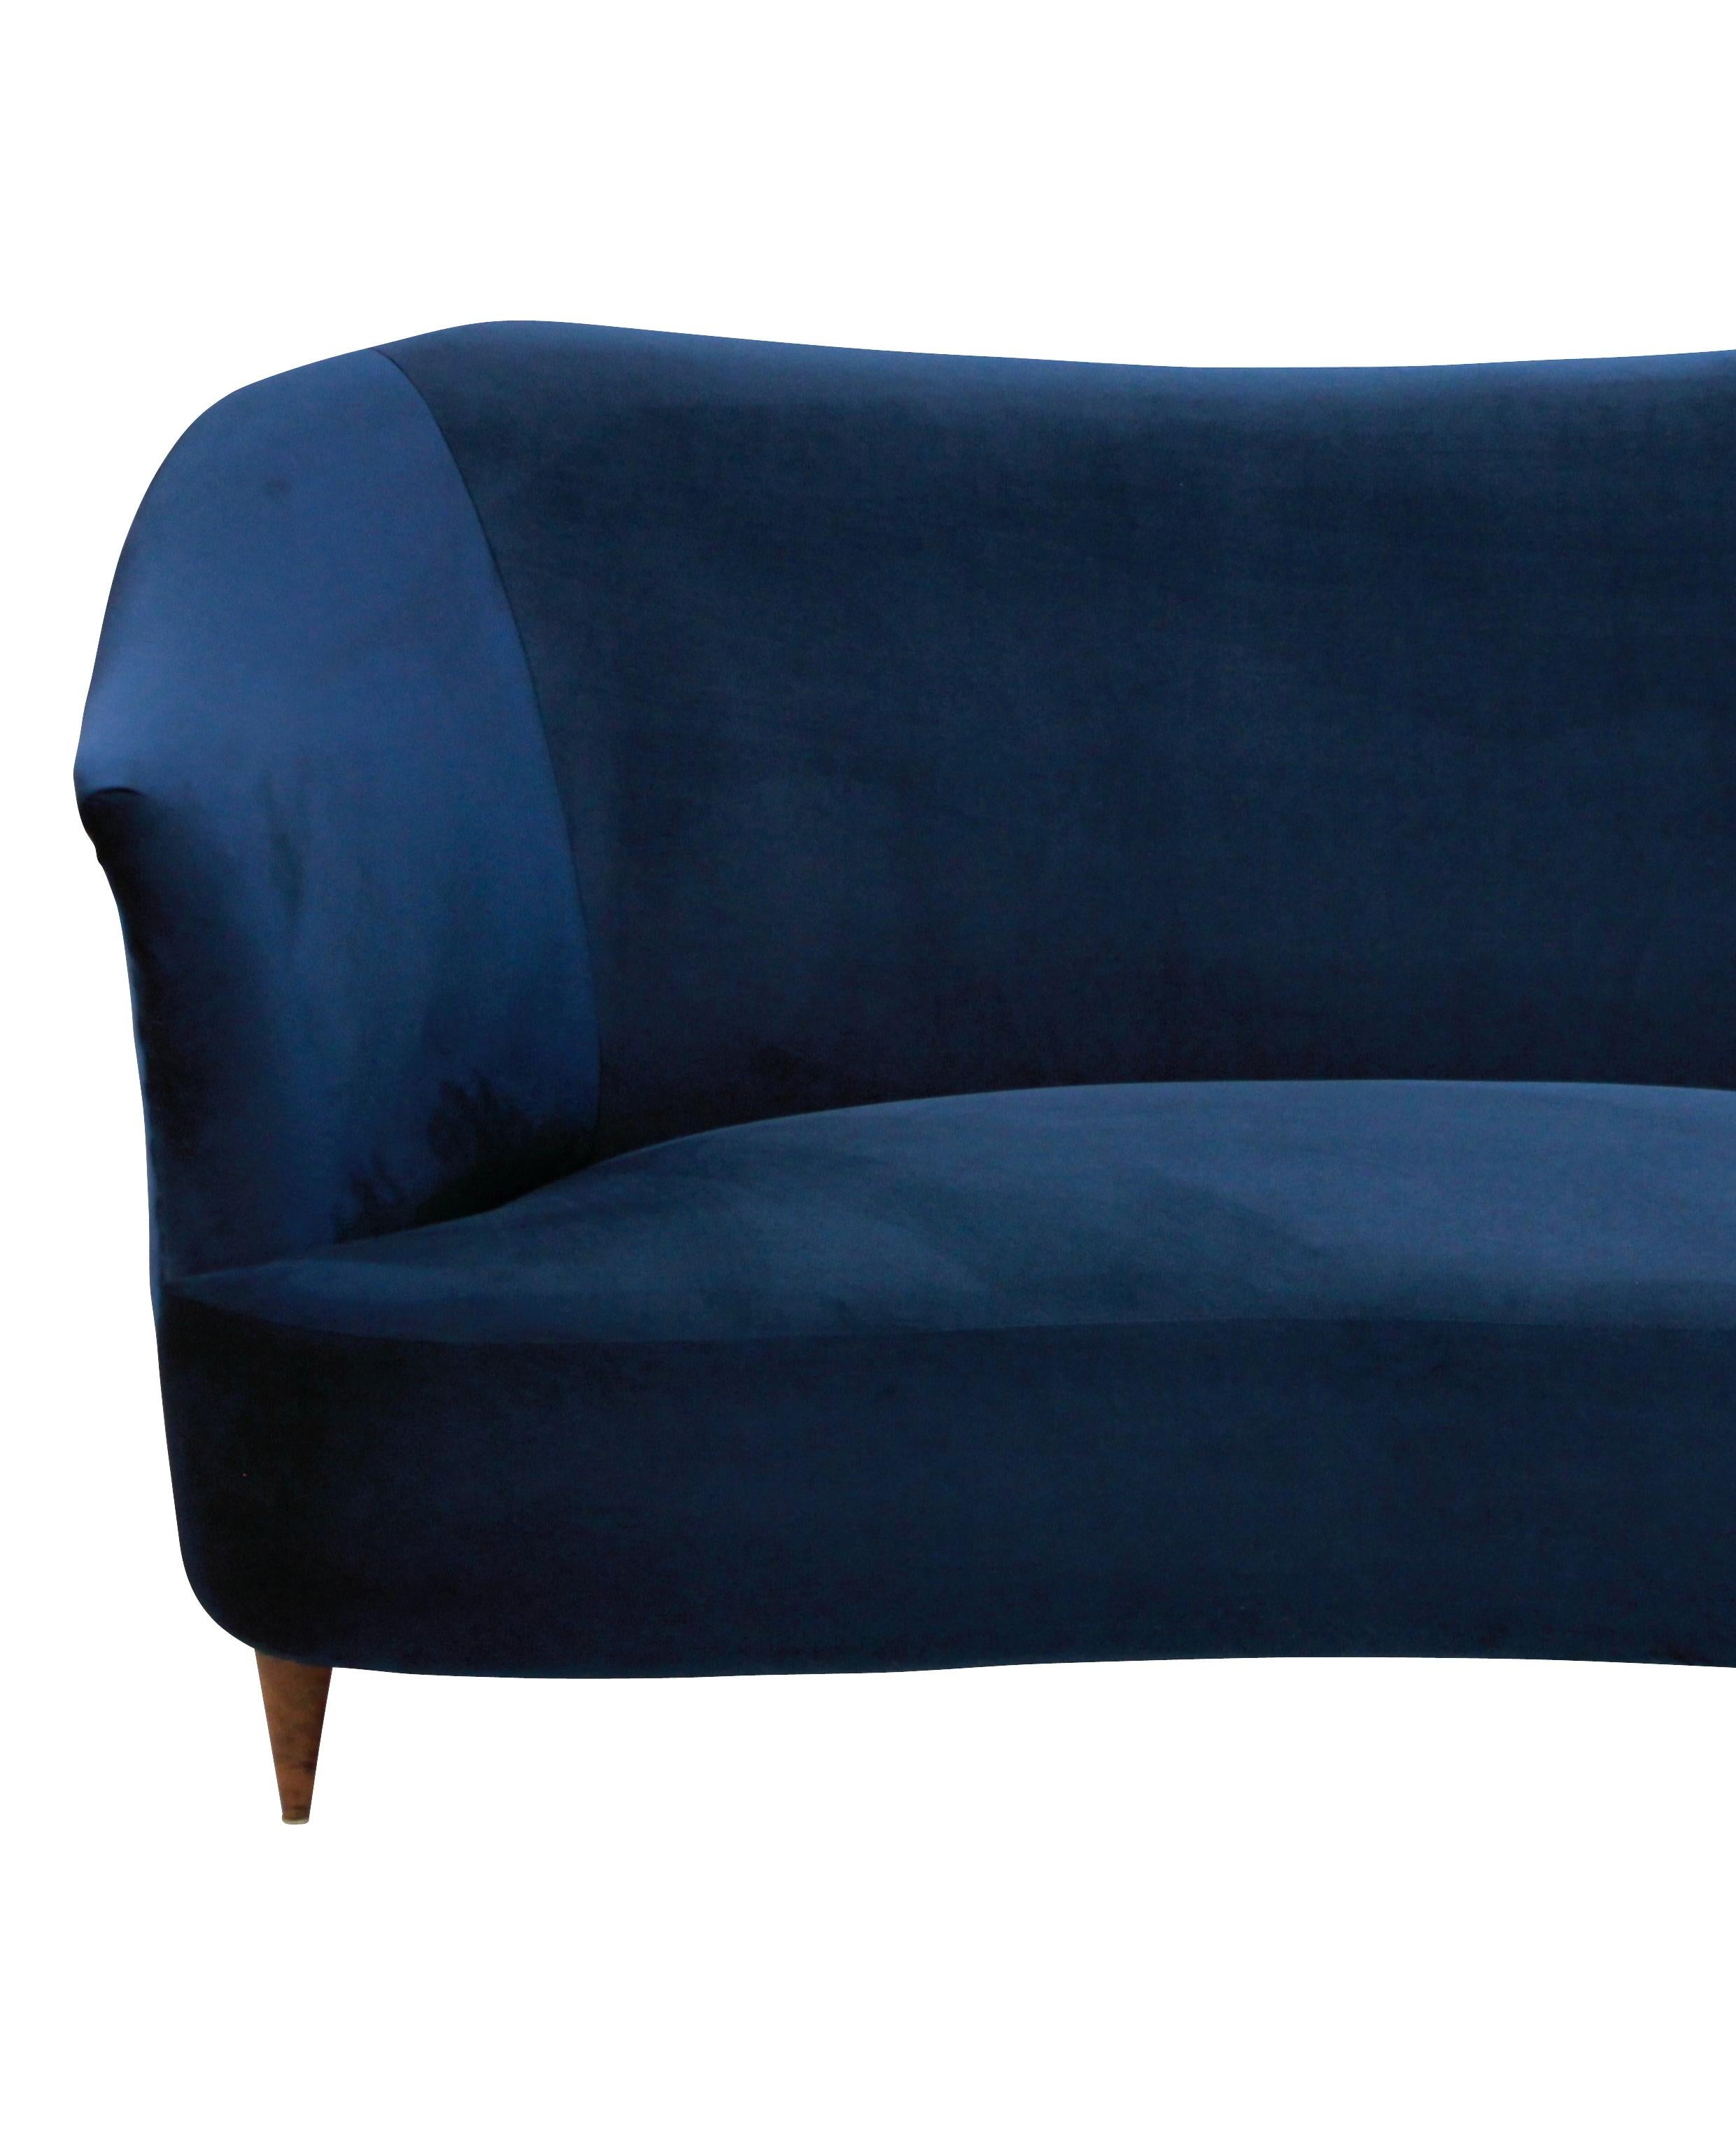 Italian Sculptural Sofa by ISA in Blue Velvet